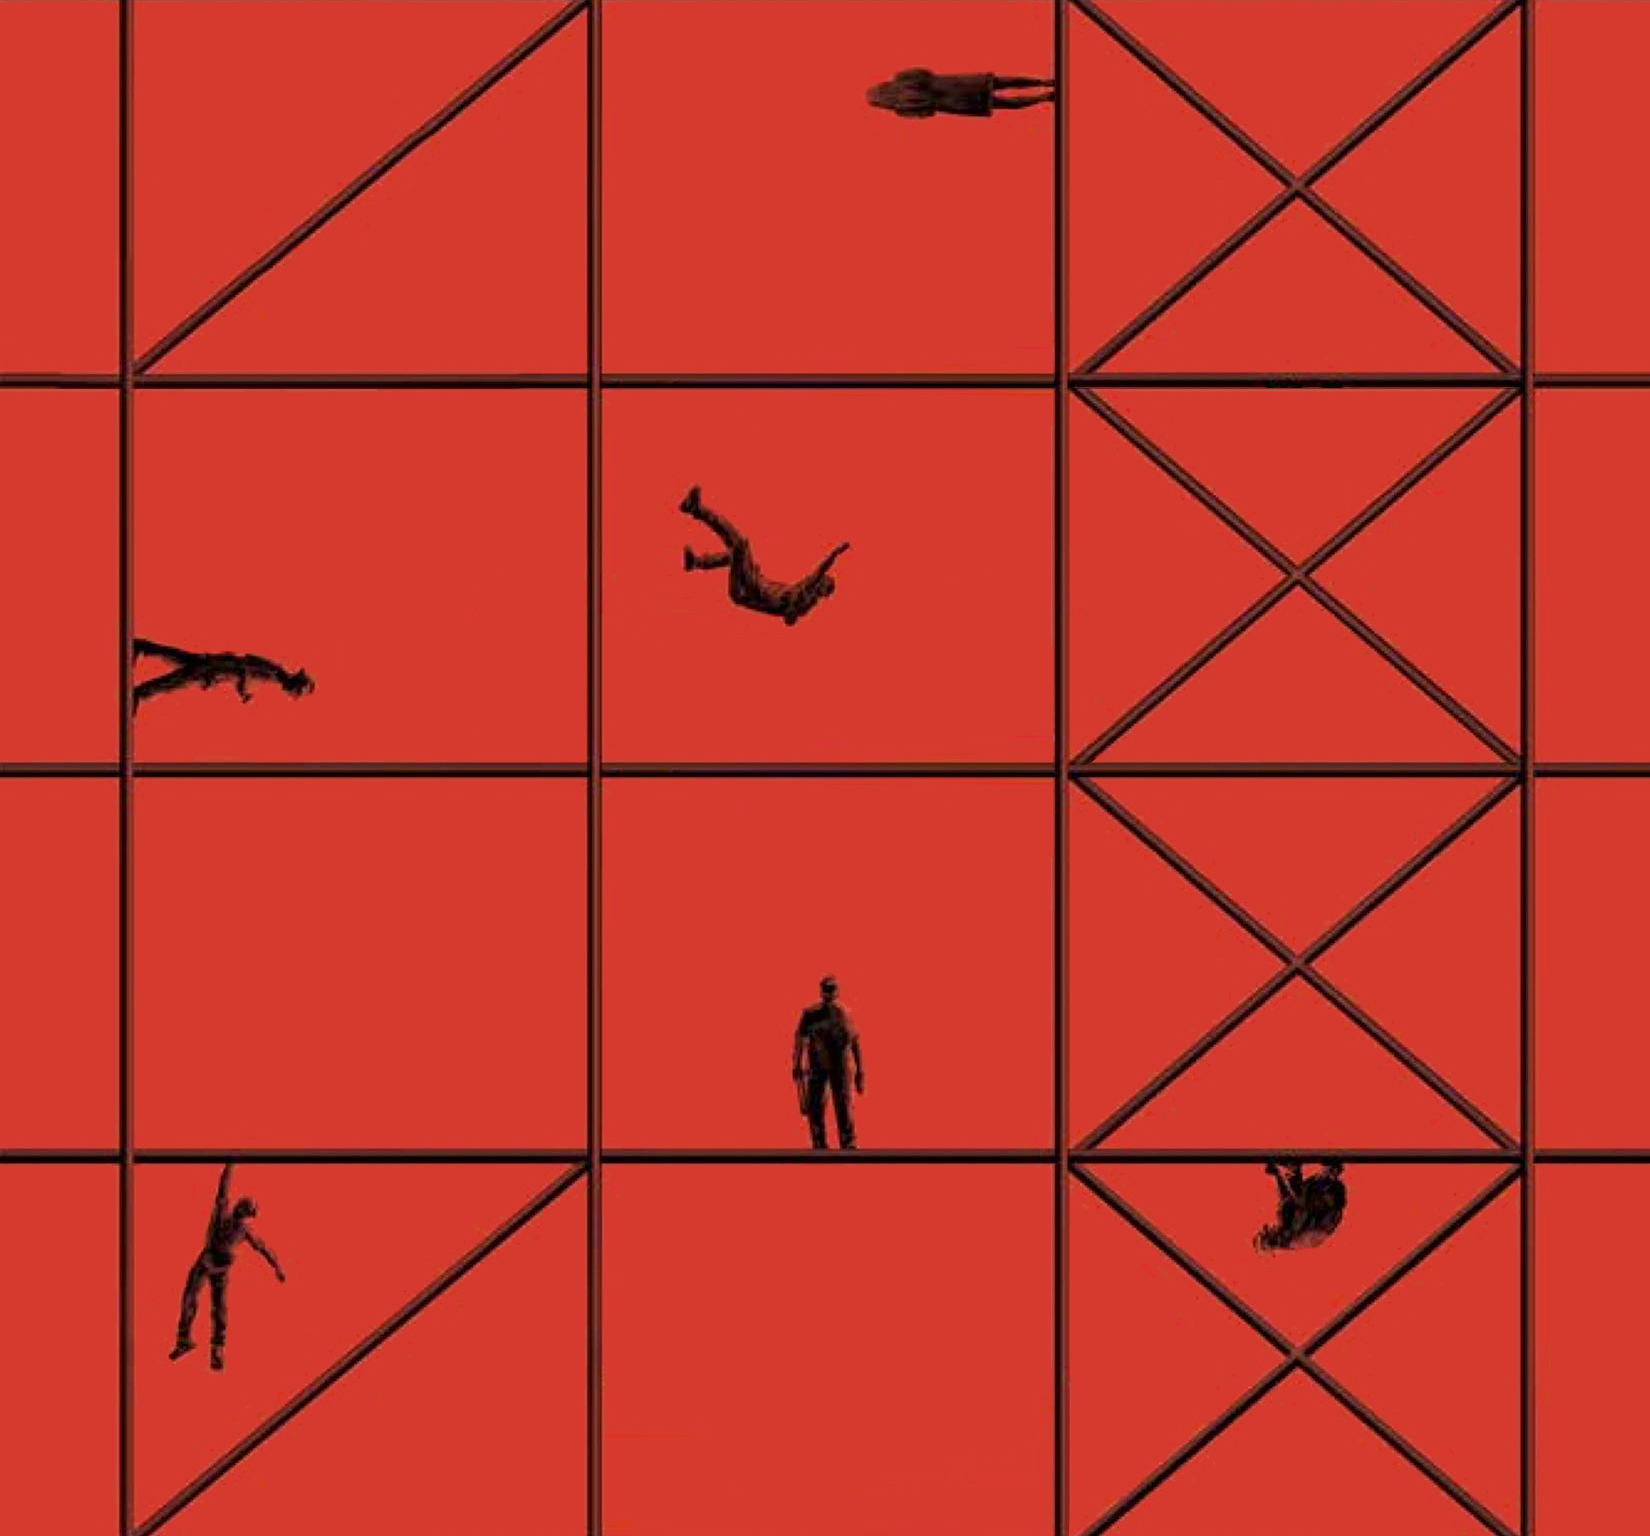 illustraton of figures within a grid framework